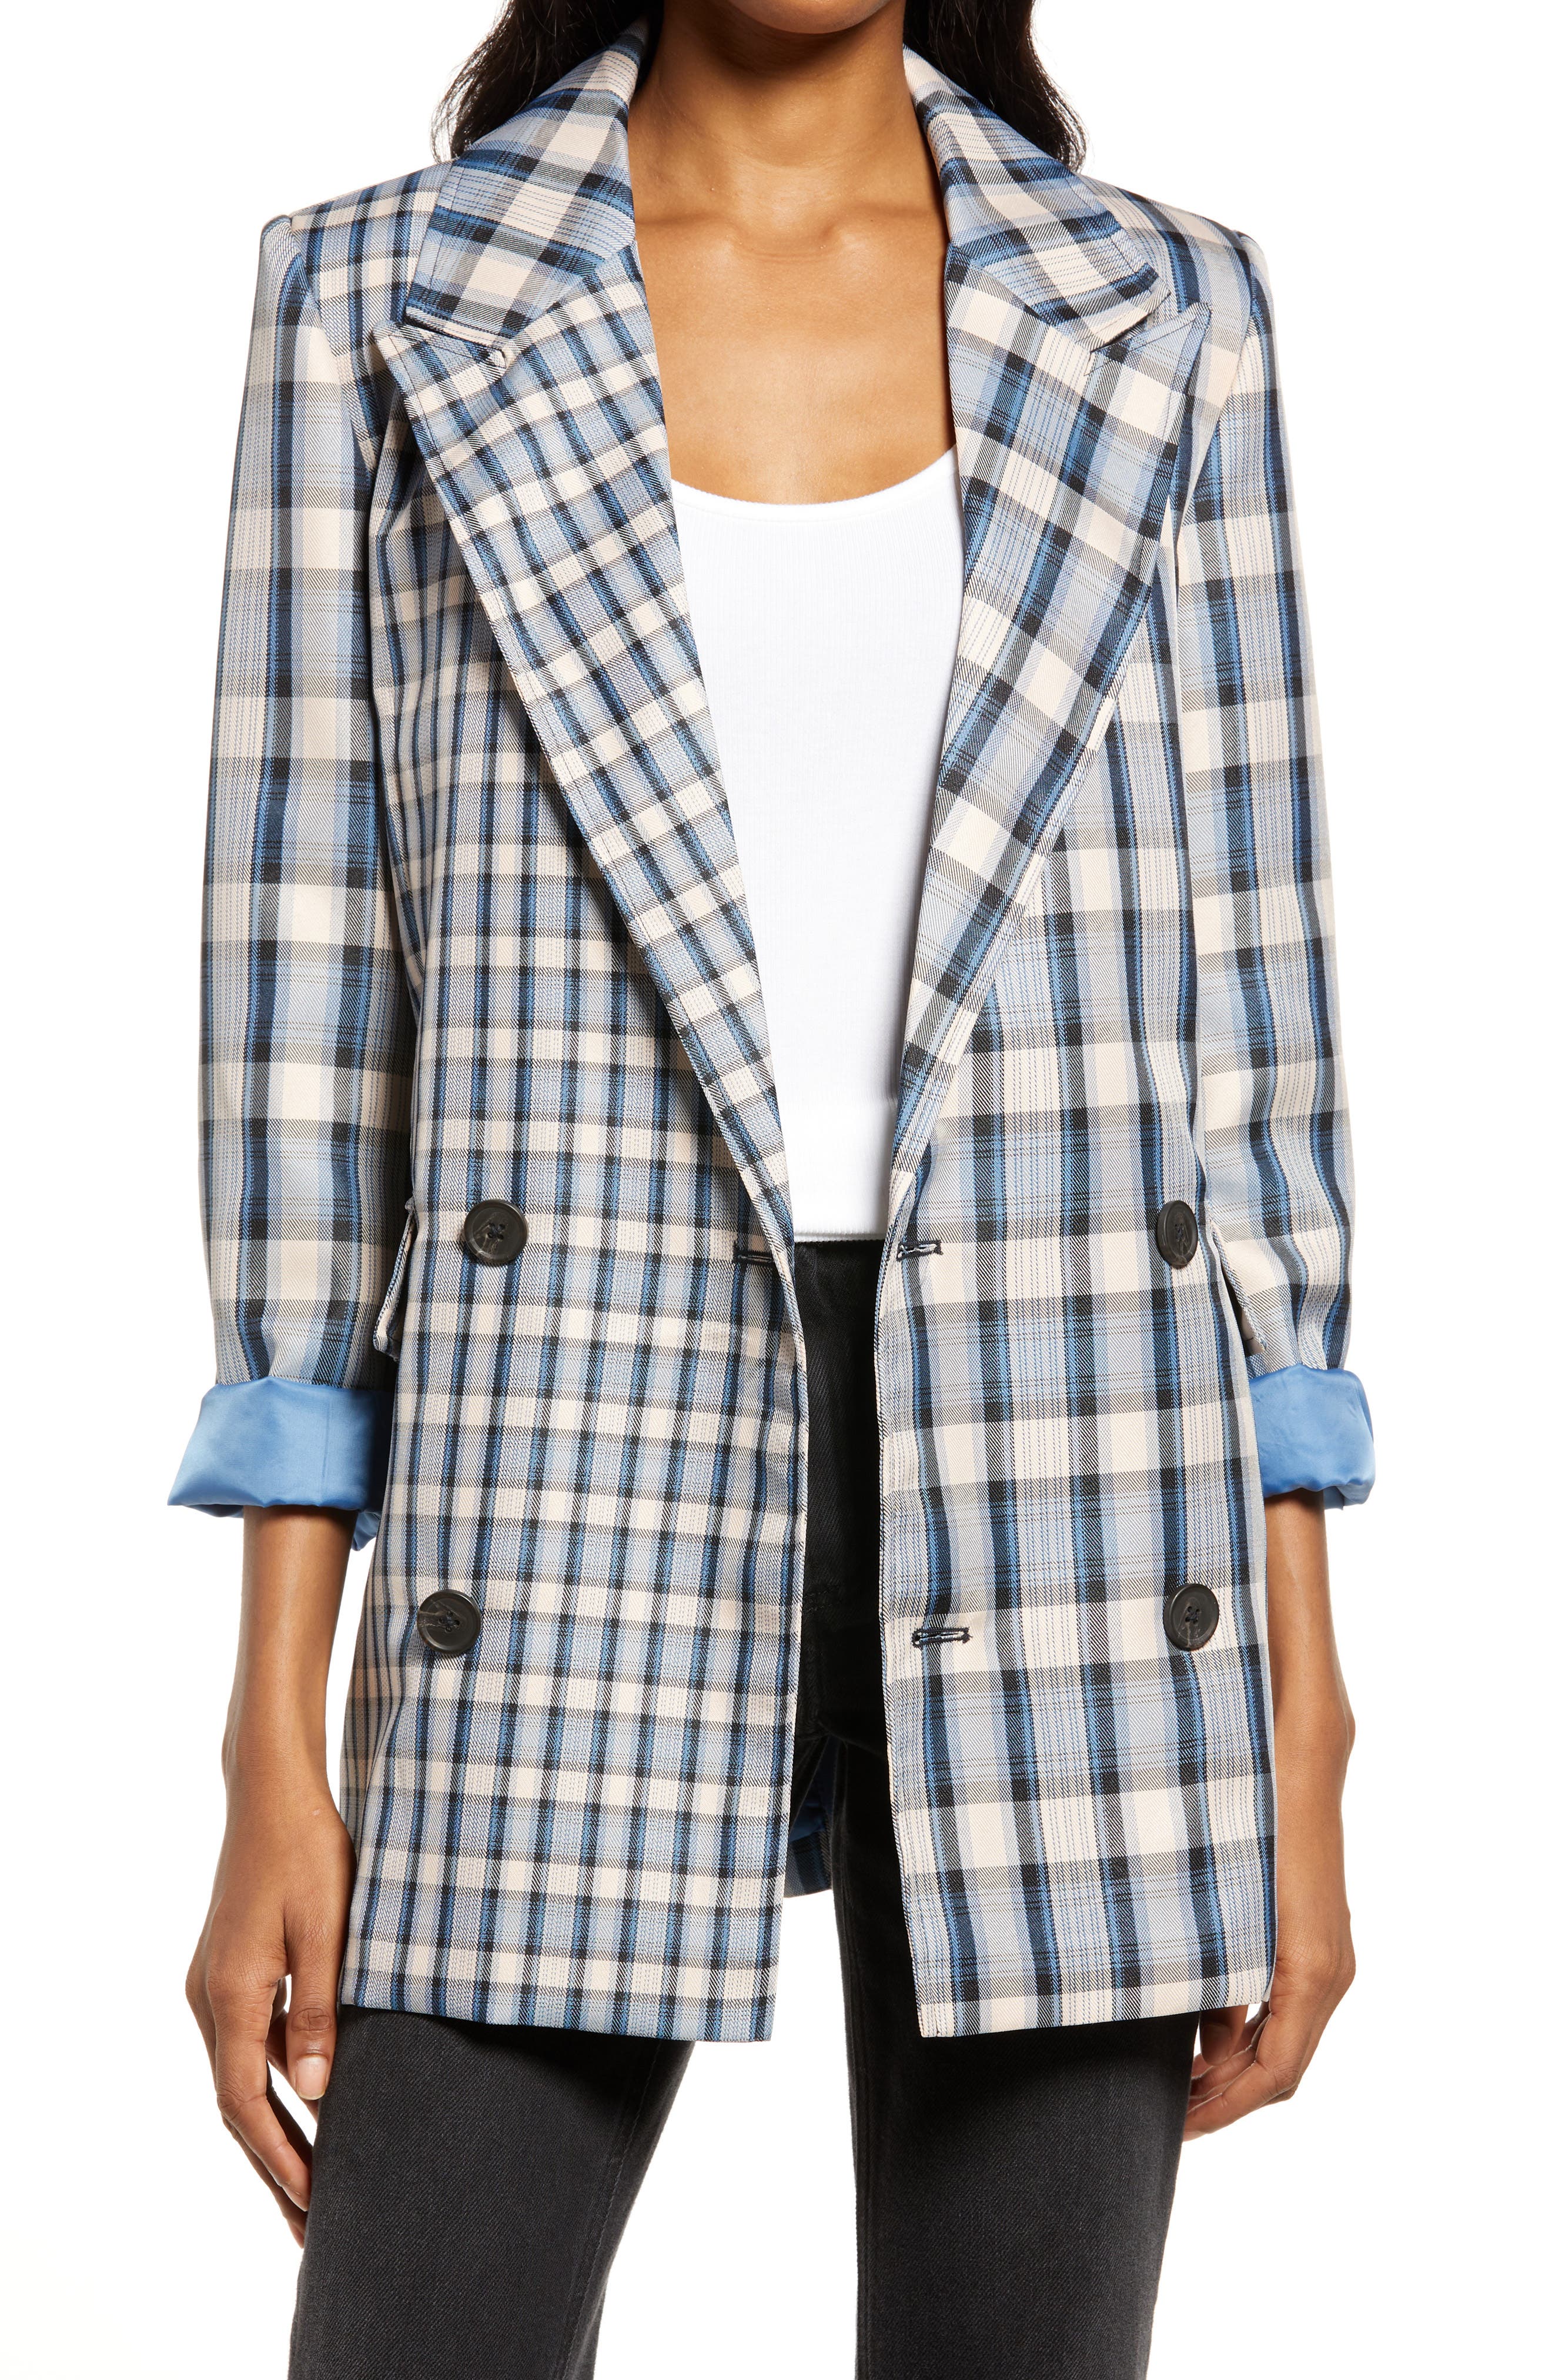 Lady Check Plaid Tartan Long Sleeve Blazer Jacket Tweed Duster Outwear Tops